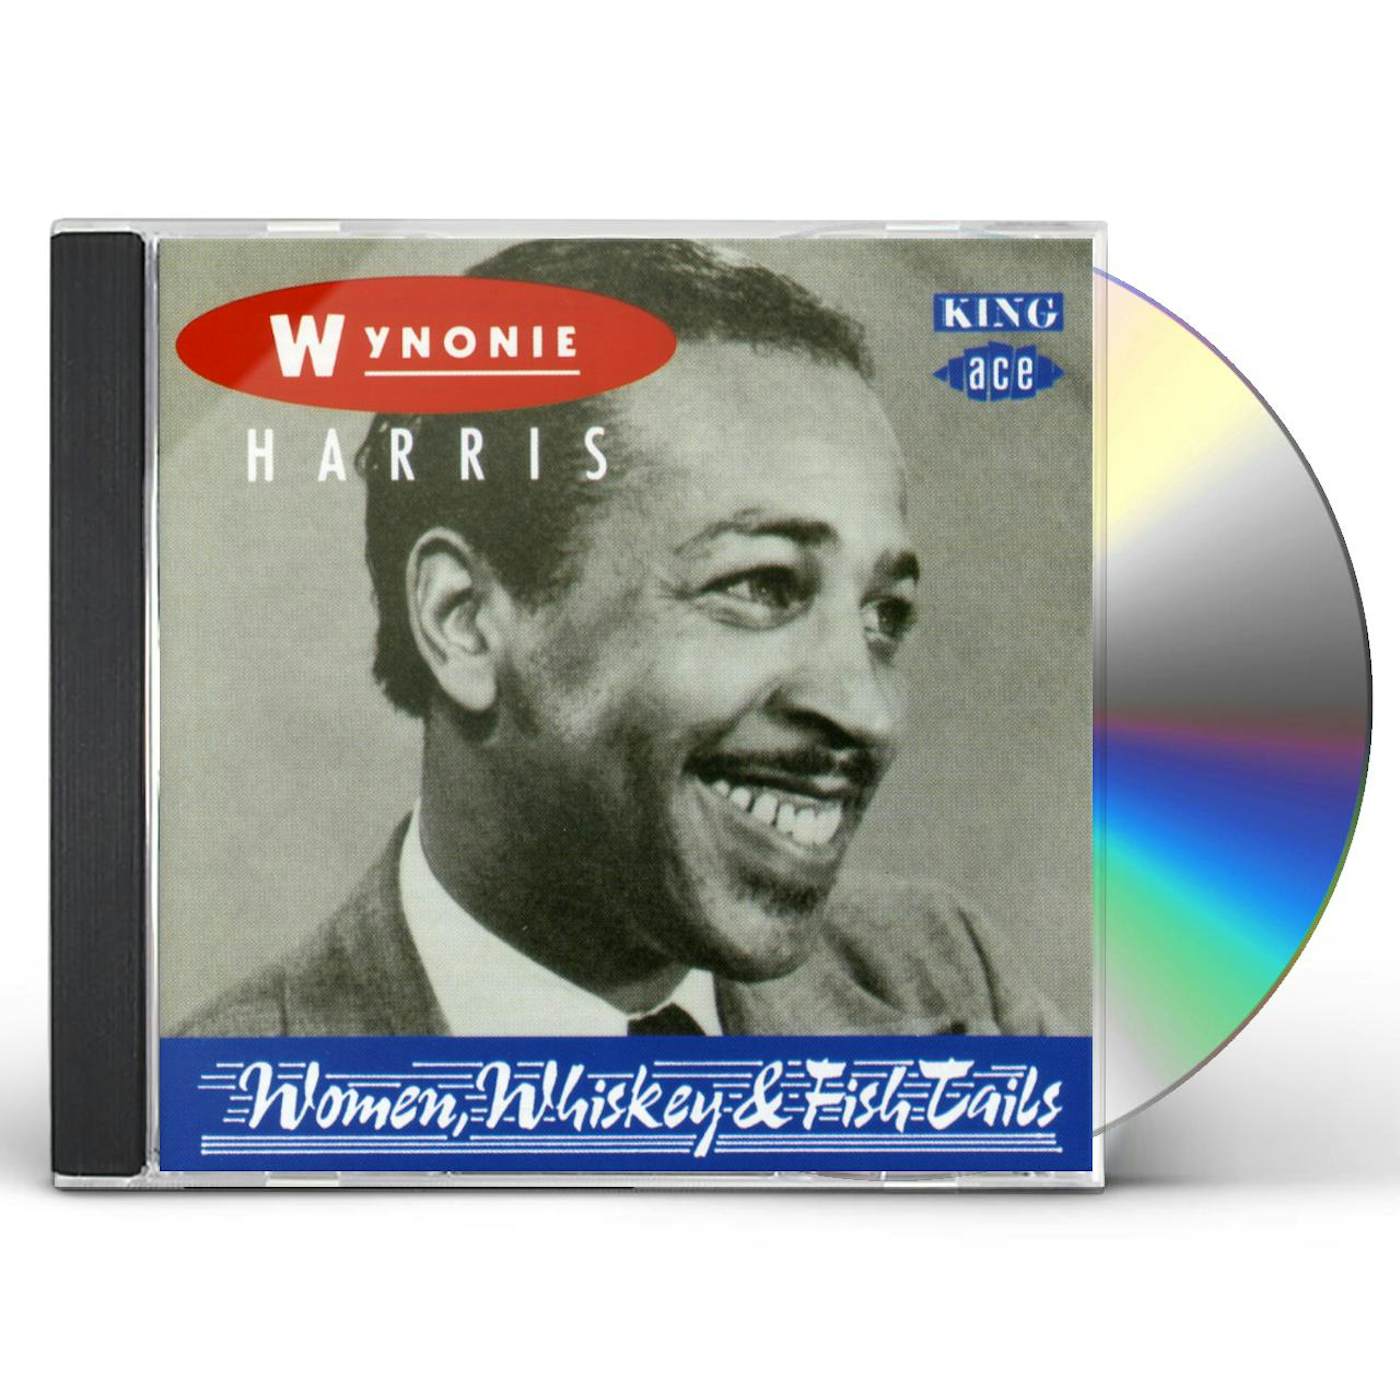 Wynonie Harris WOMEN WHISKEY & FISH TAILS CD